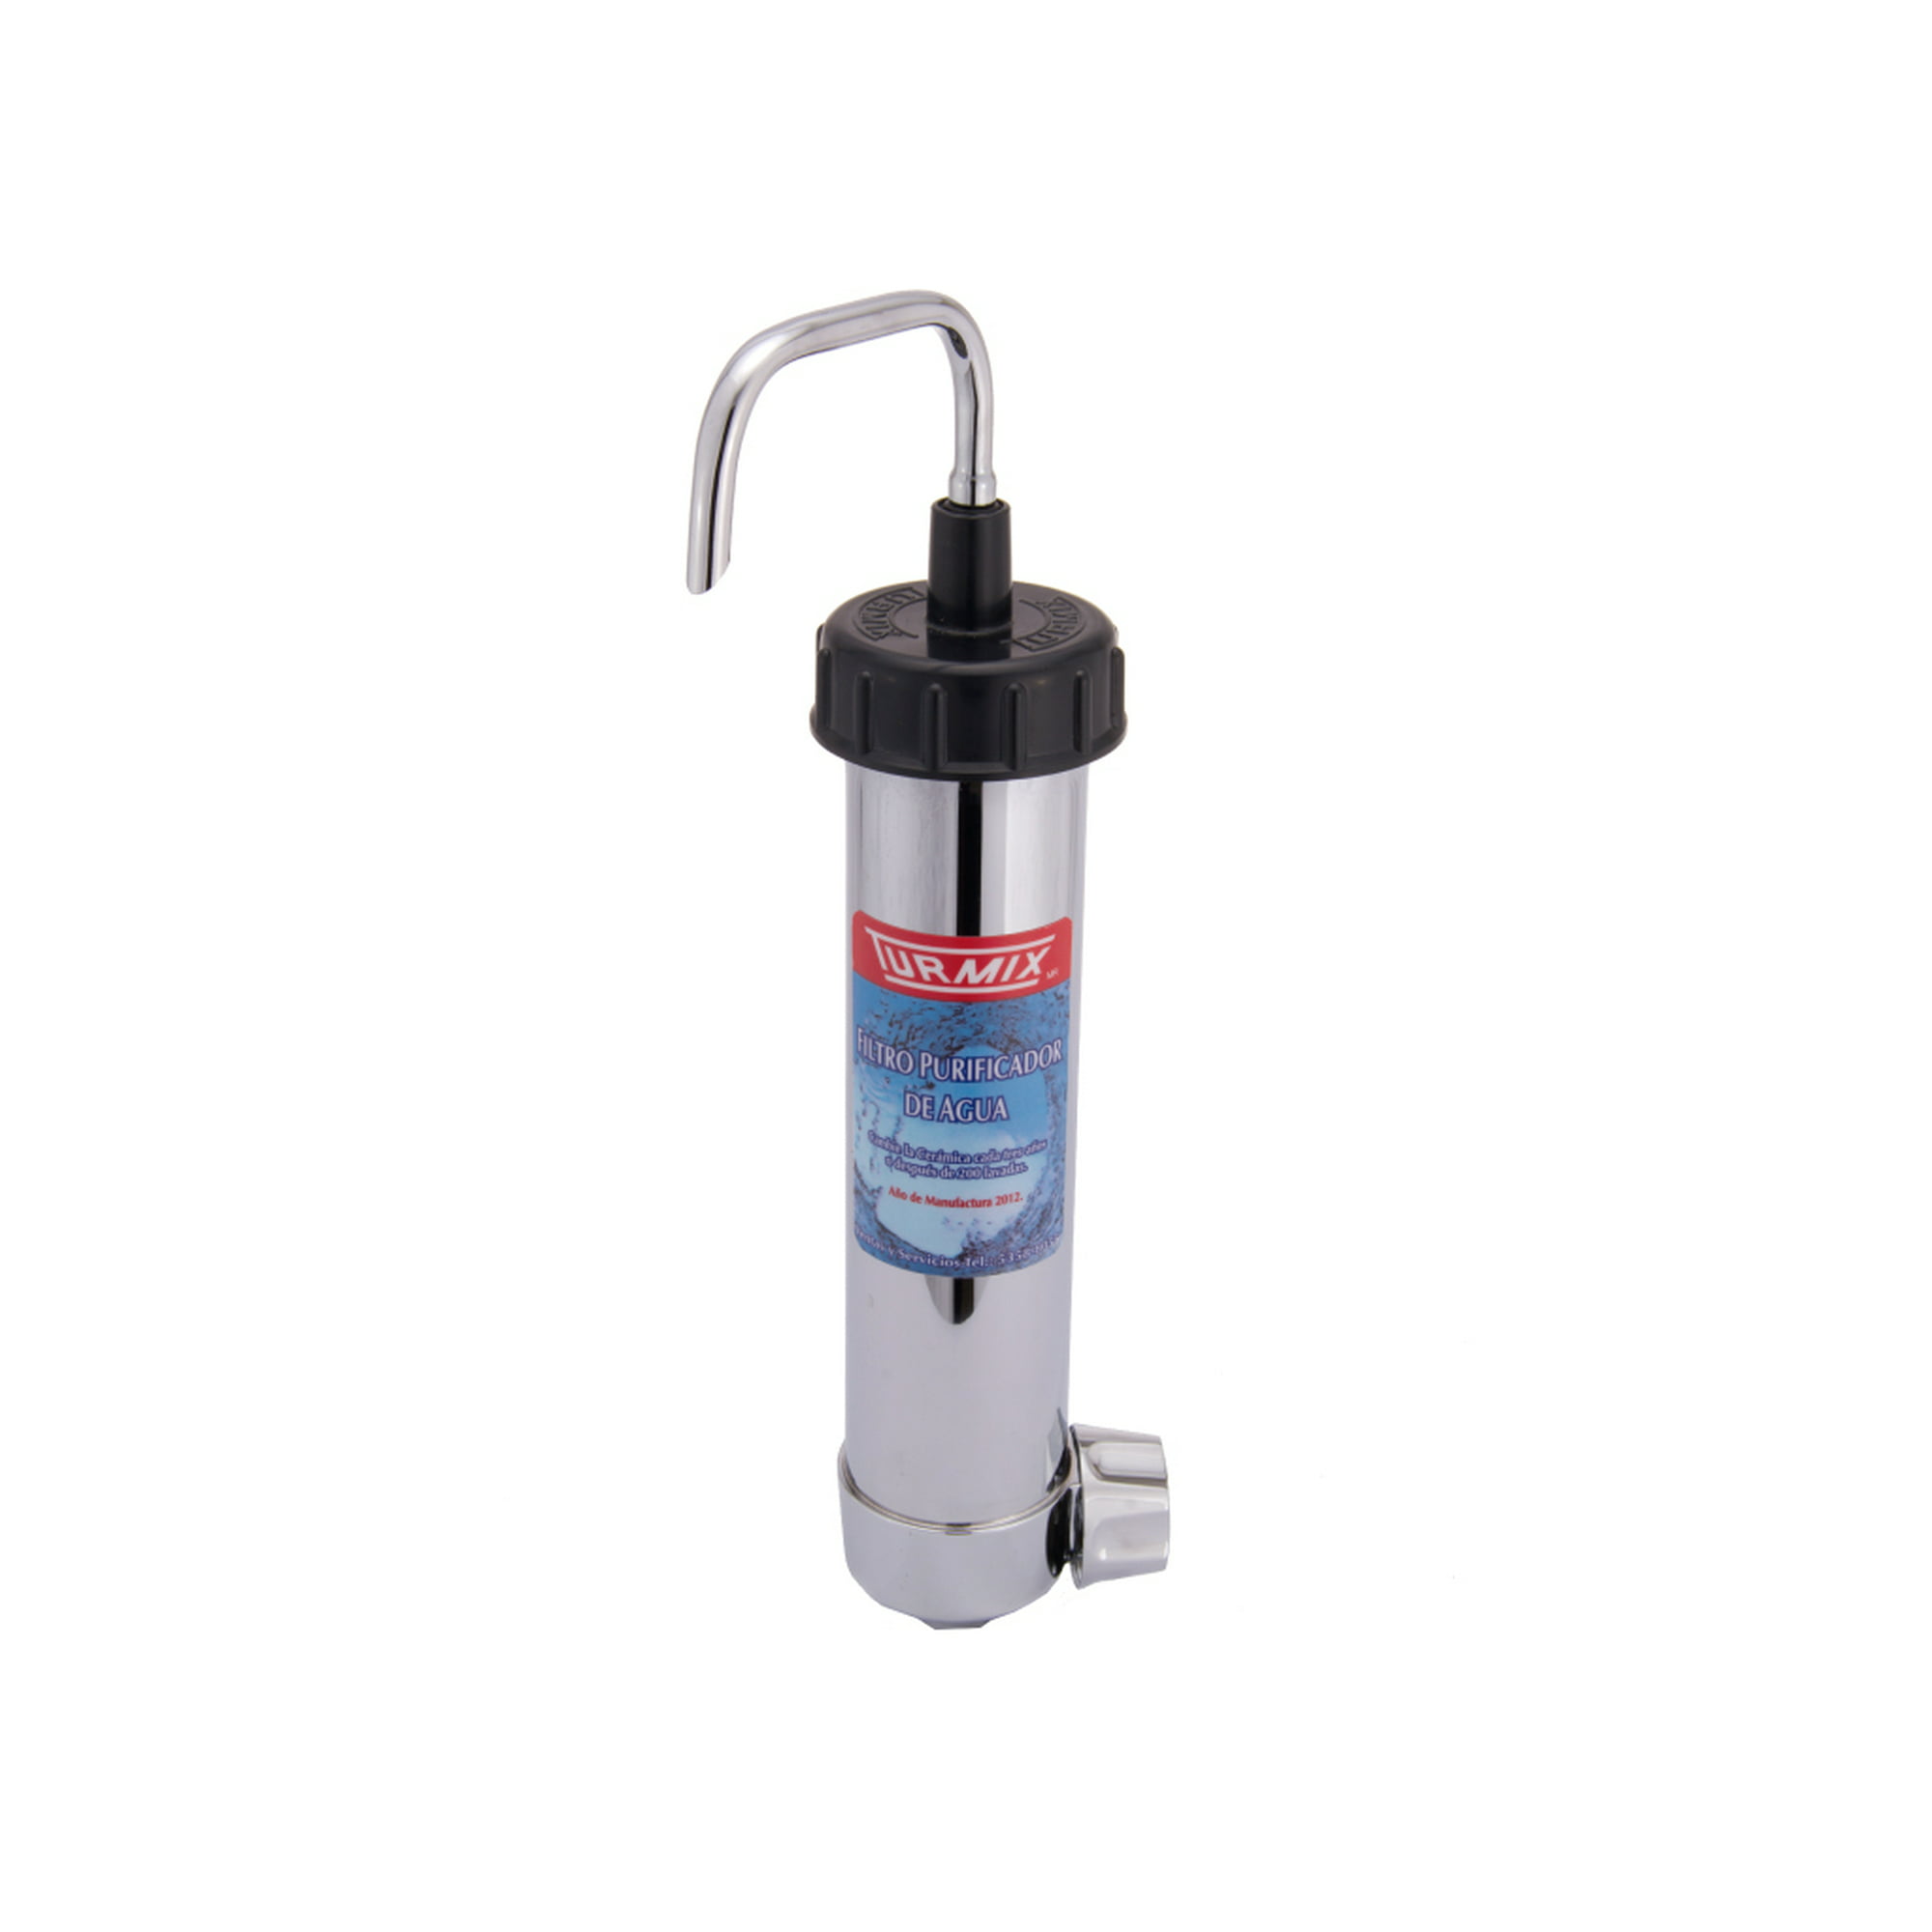 Filtro purificador agua modelo hk domestico turmix tu35 turmix hk domestico